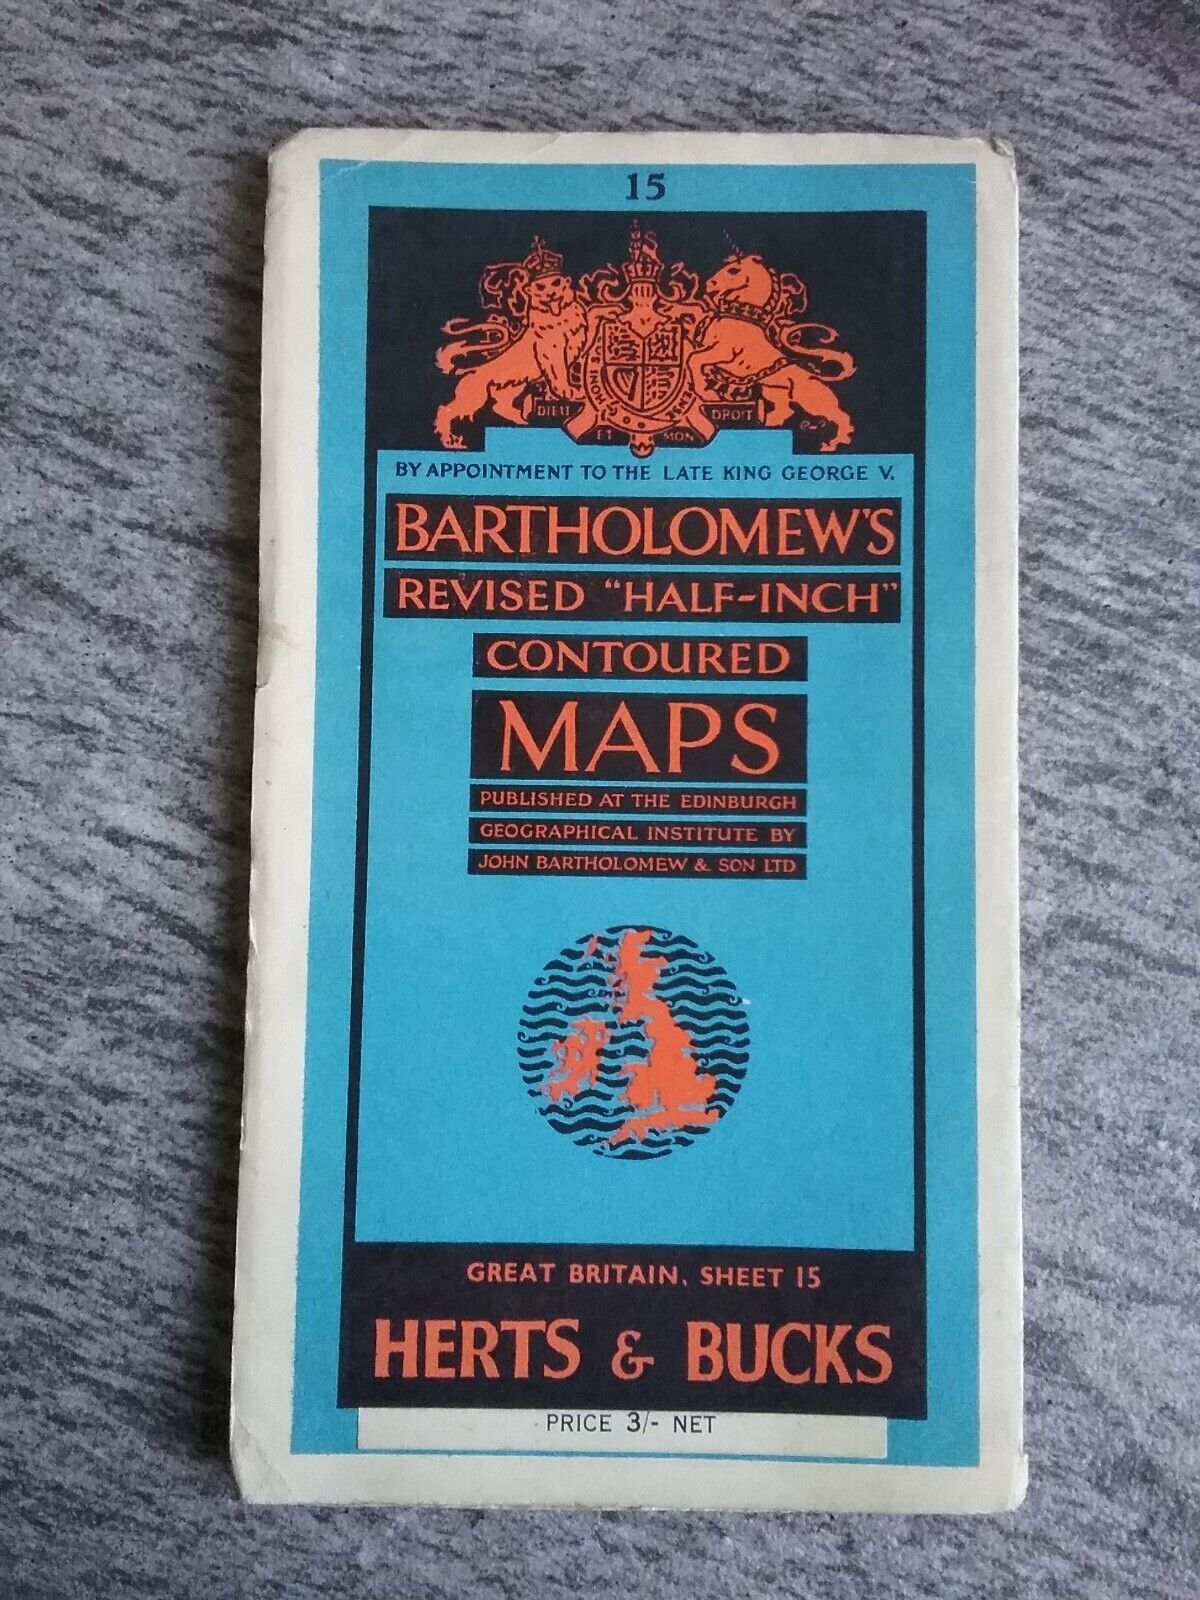  Herts & Bucks Vintage Bartholomew's Map, Revised Half-Inch Contoured, Sheet 15